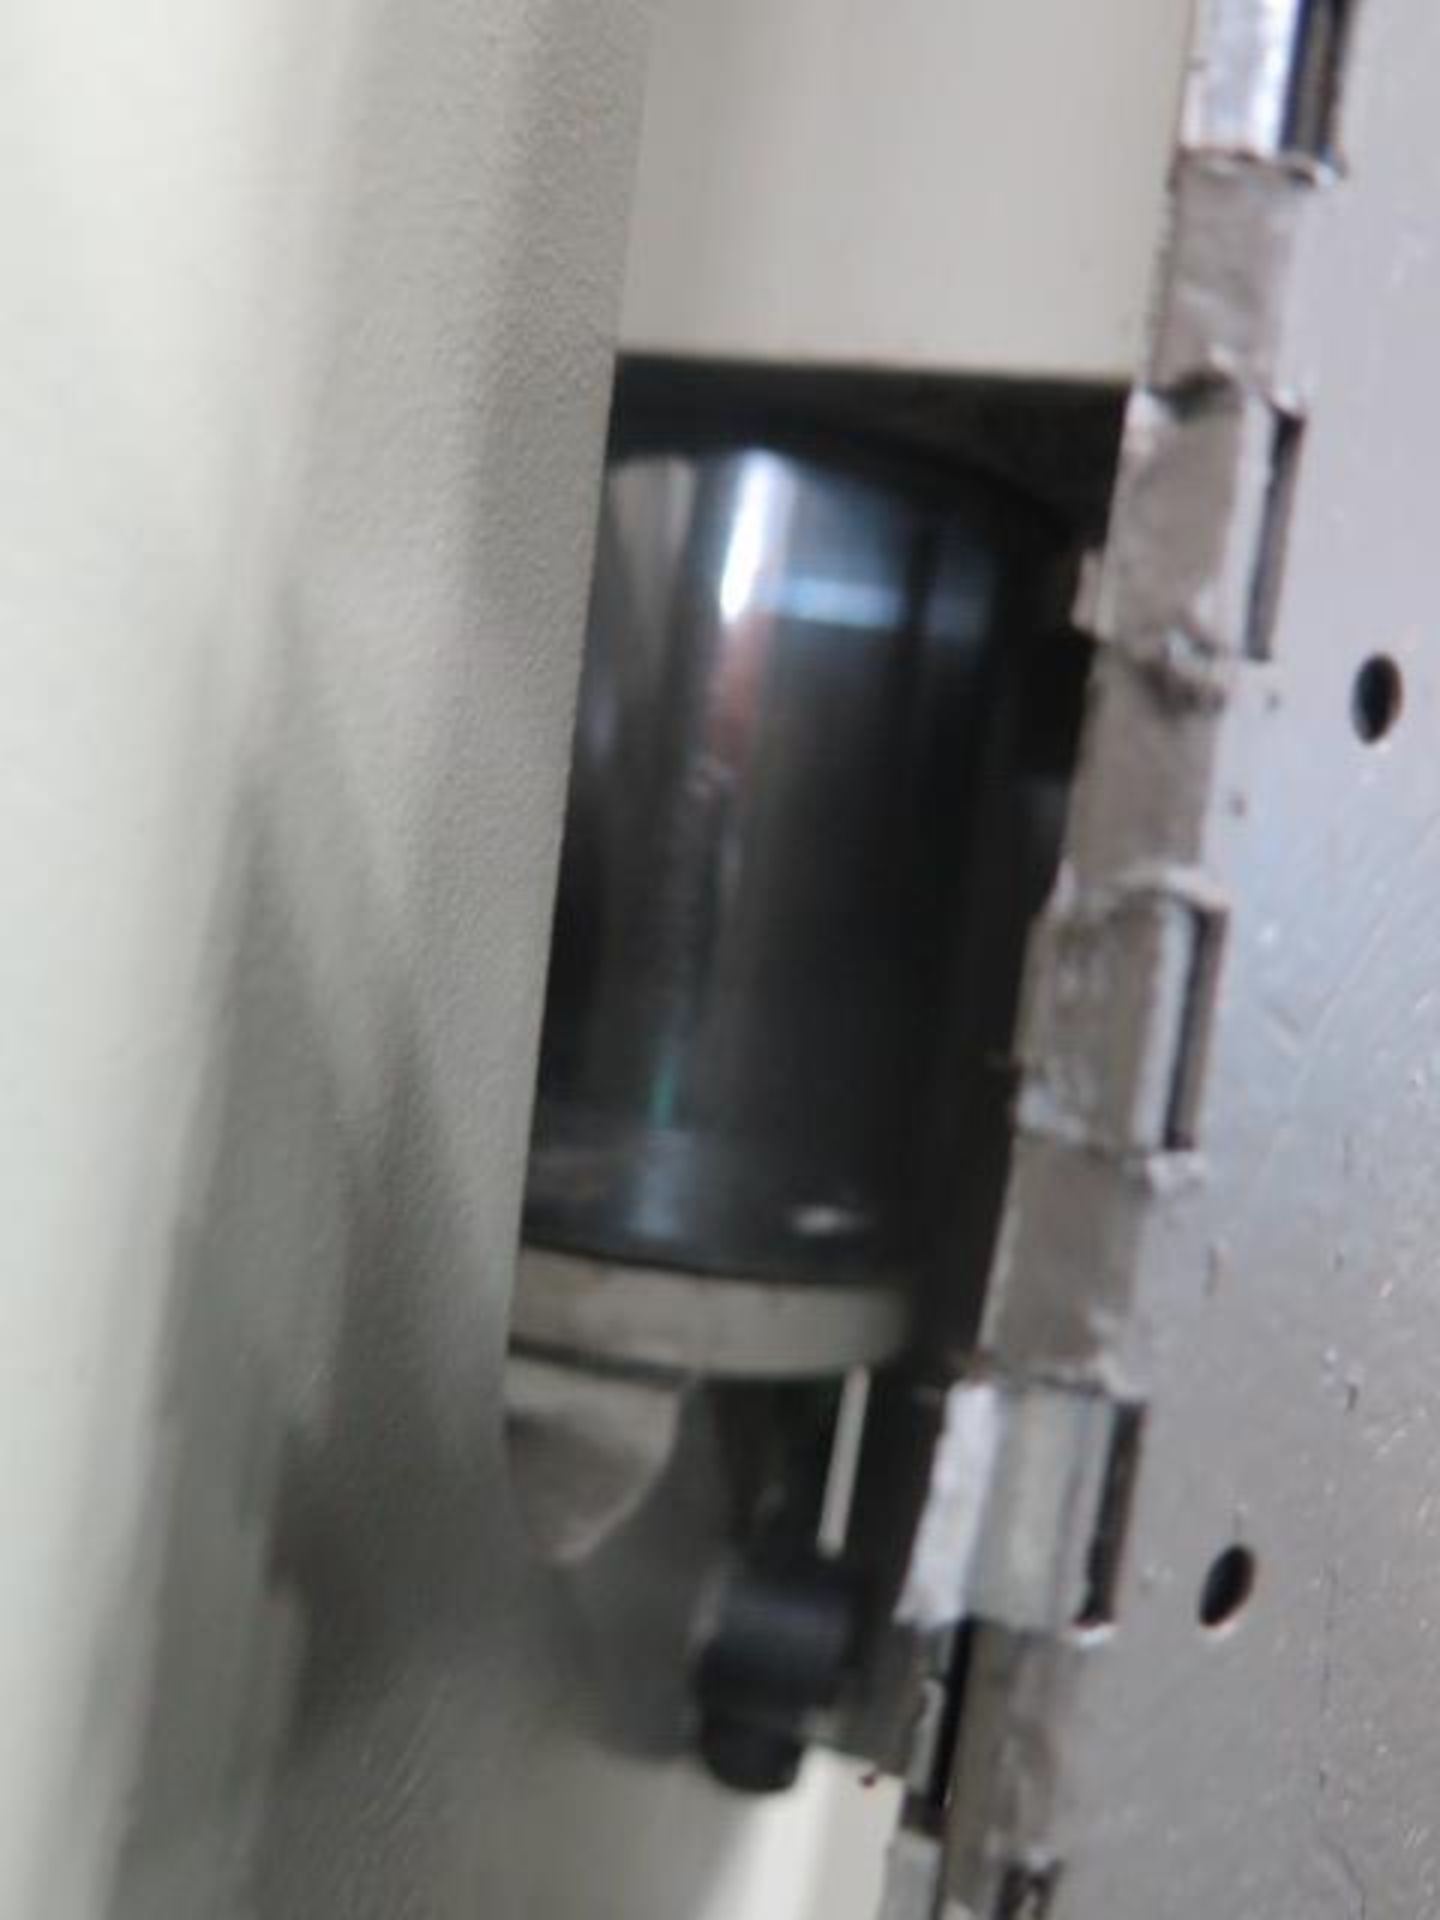 2004 Durma HAP2035 35 Ton x 81” CNC Press Brake s/n 7013045175 w/ Durma LG Controls, SOLD AS IS - Image 8 of 16